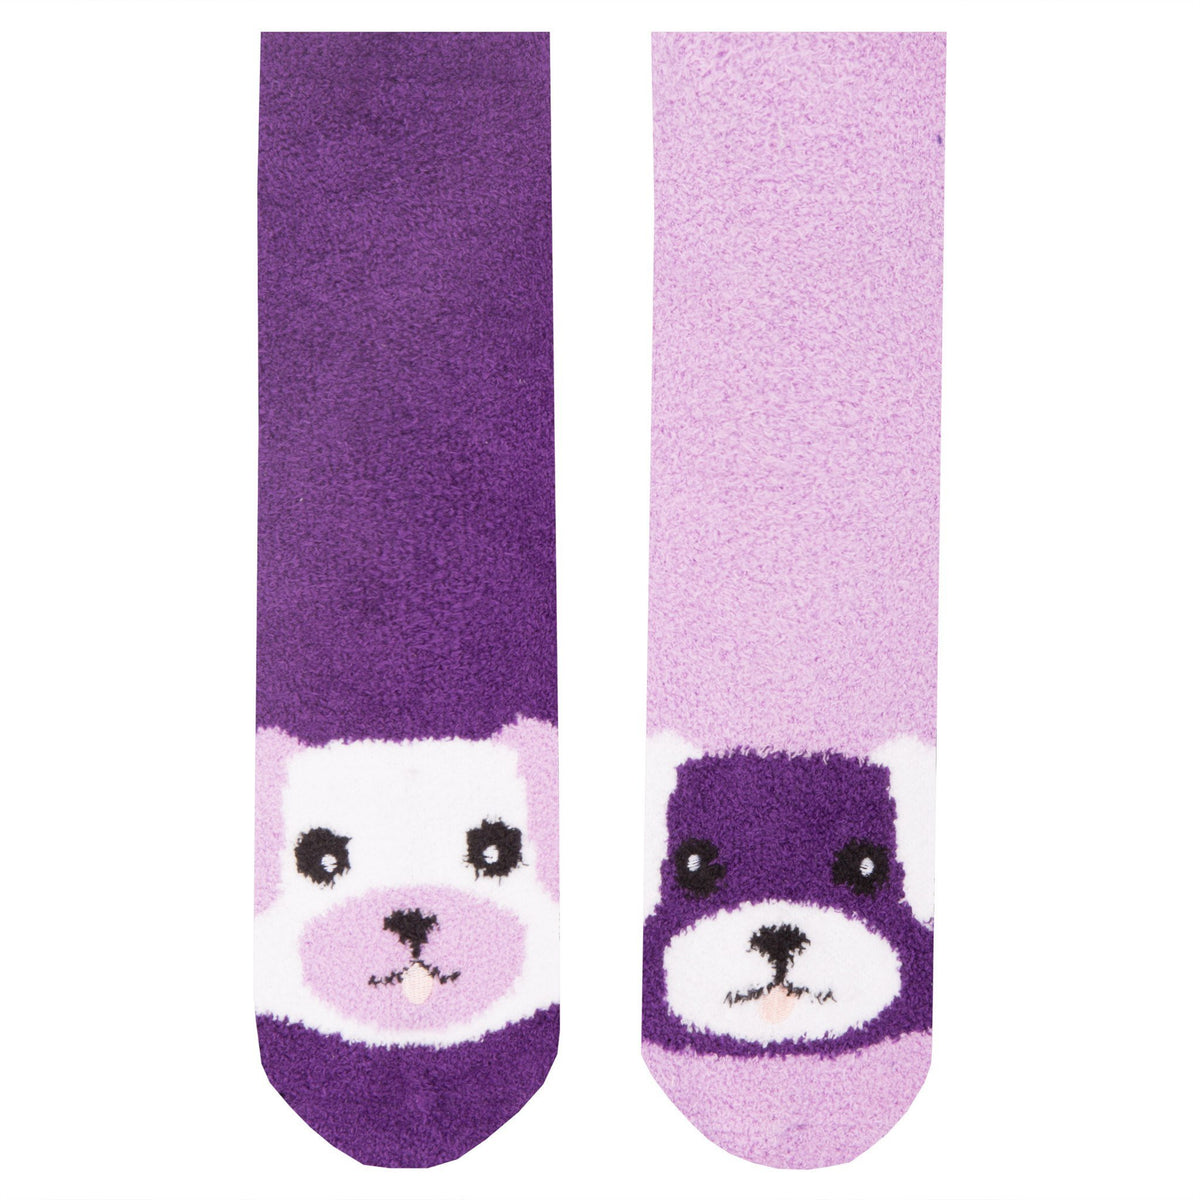 Women's Soft Anti-Skid Micro-Plush Winter Crew Socks - Set A9 - Dog [Gift Packaged]